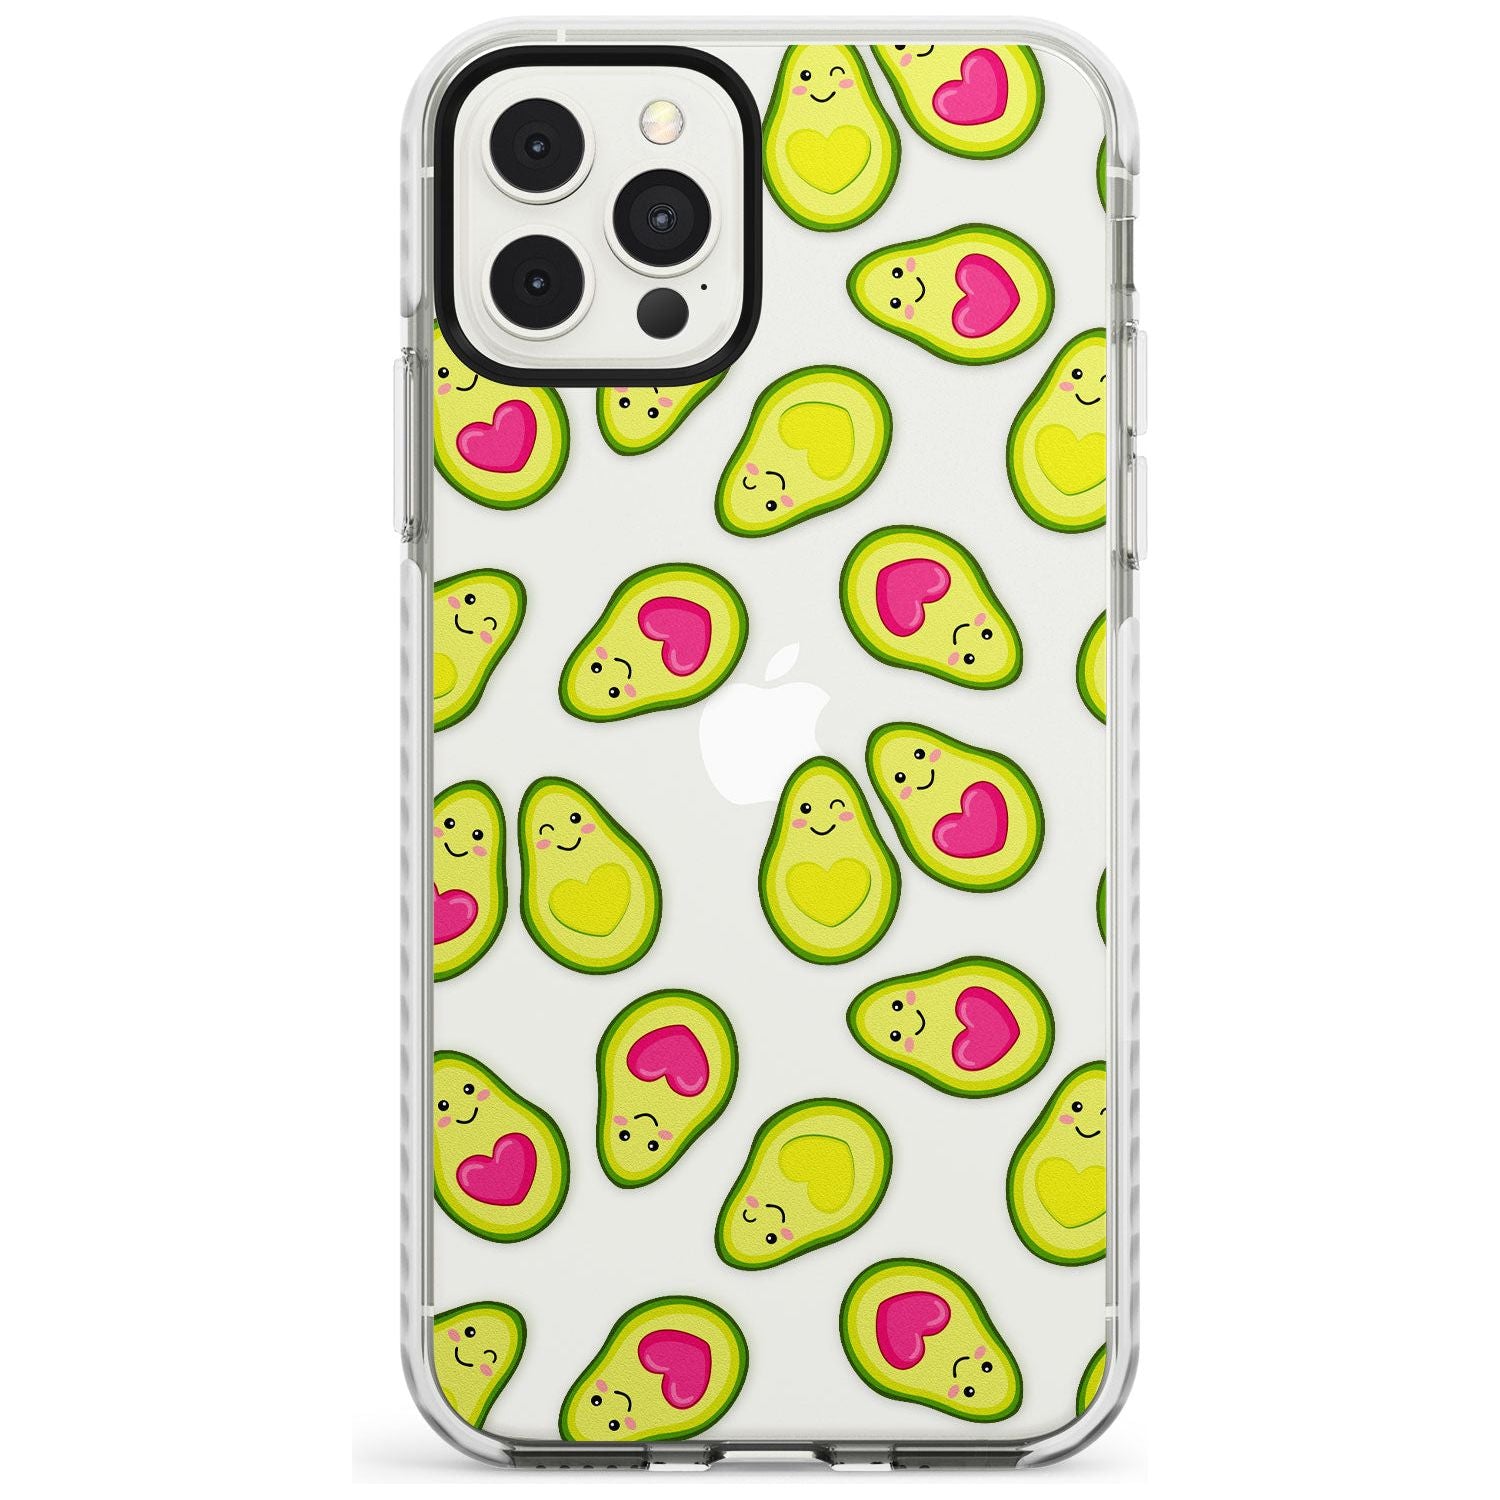 Avocado Love Impact Phone Case for iPhone 11 Pro Max